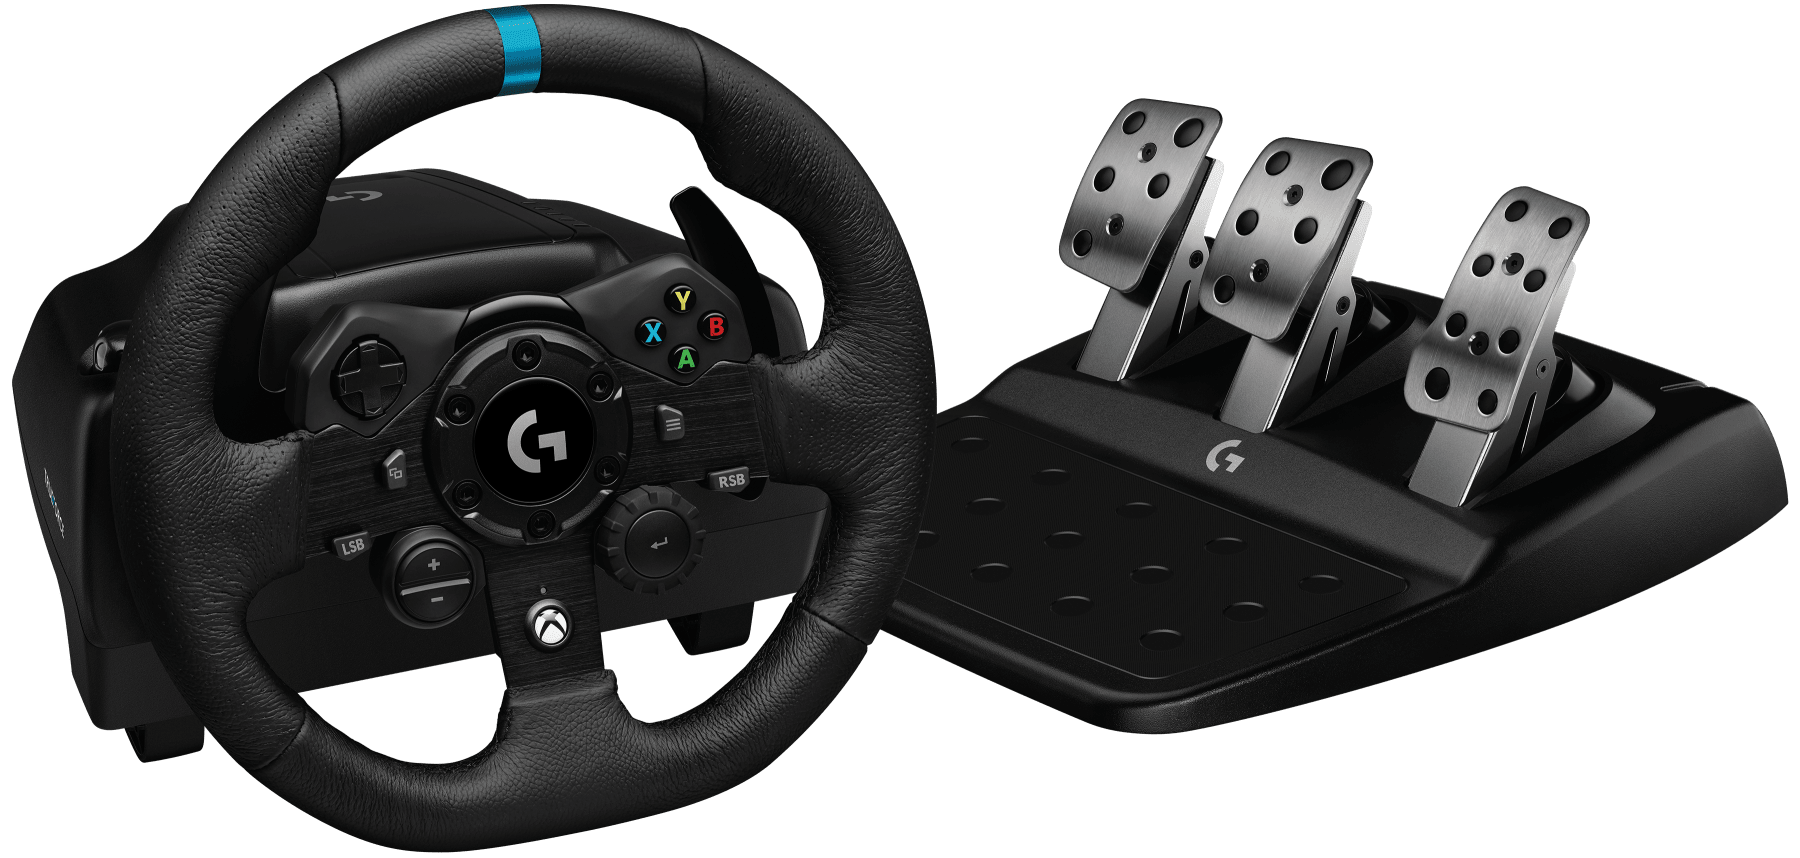 (refurb) Logitech G923 Trueforce Racing Wheel w/ Pedals $230 + free s/h